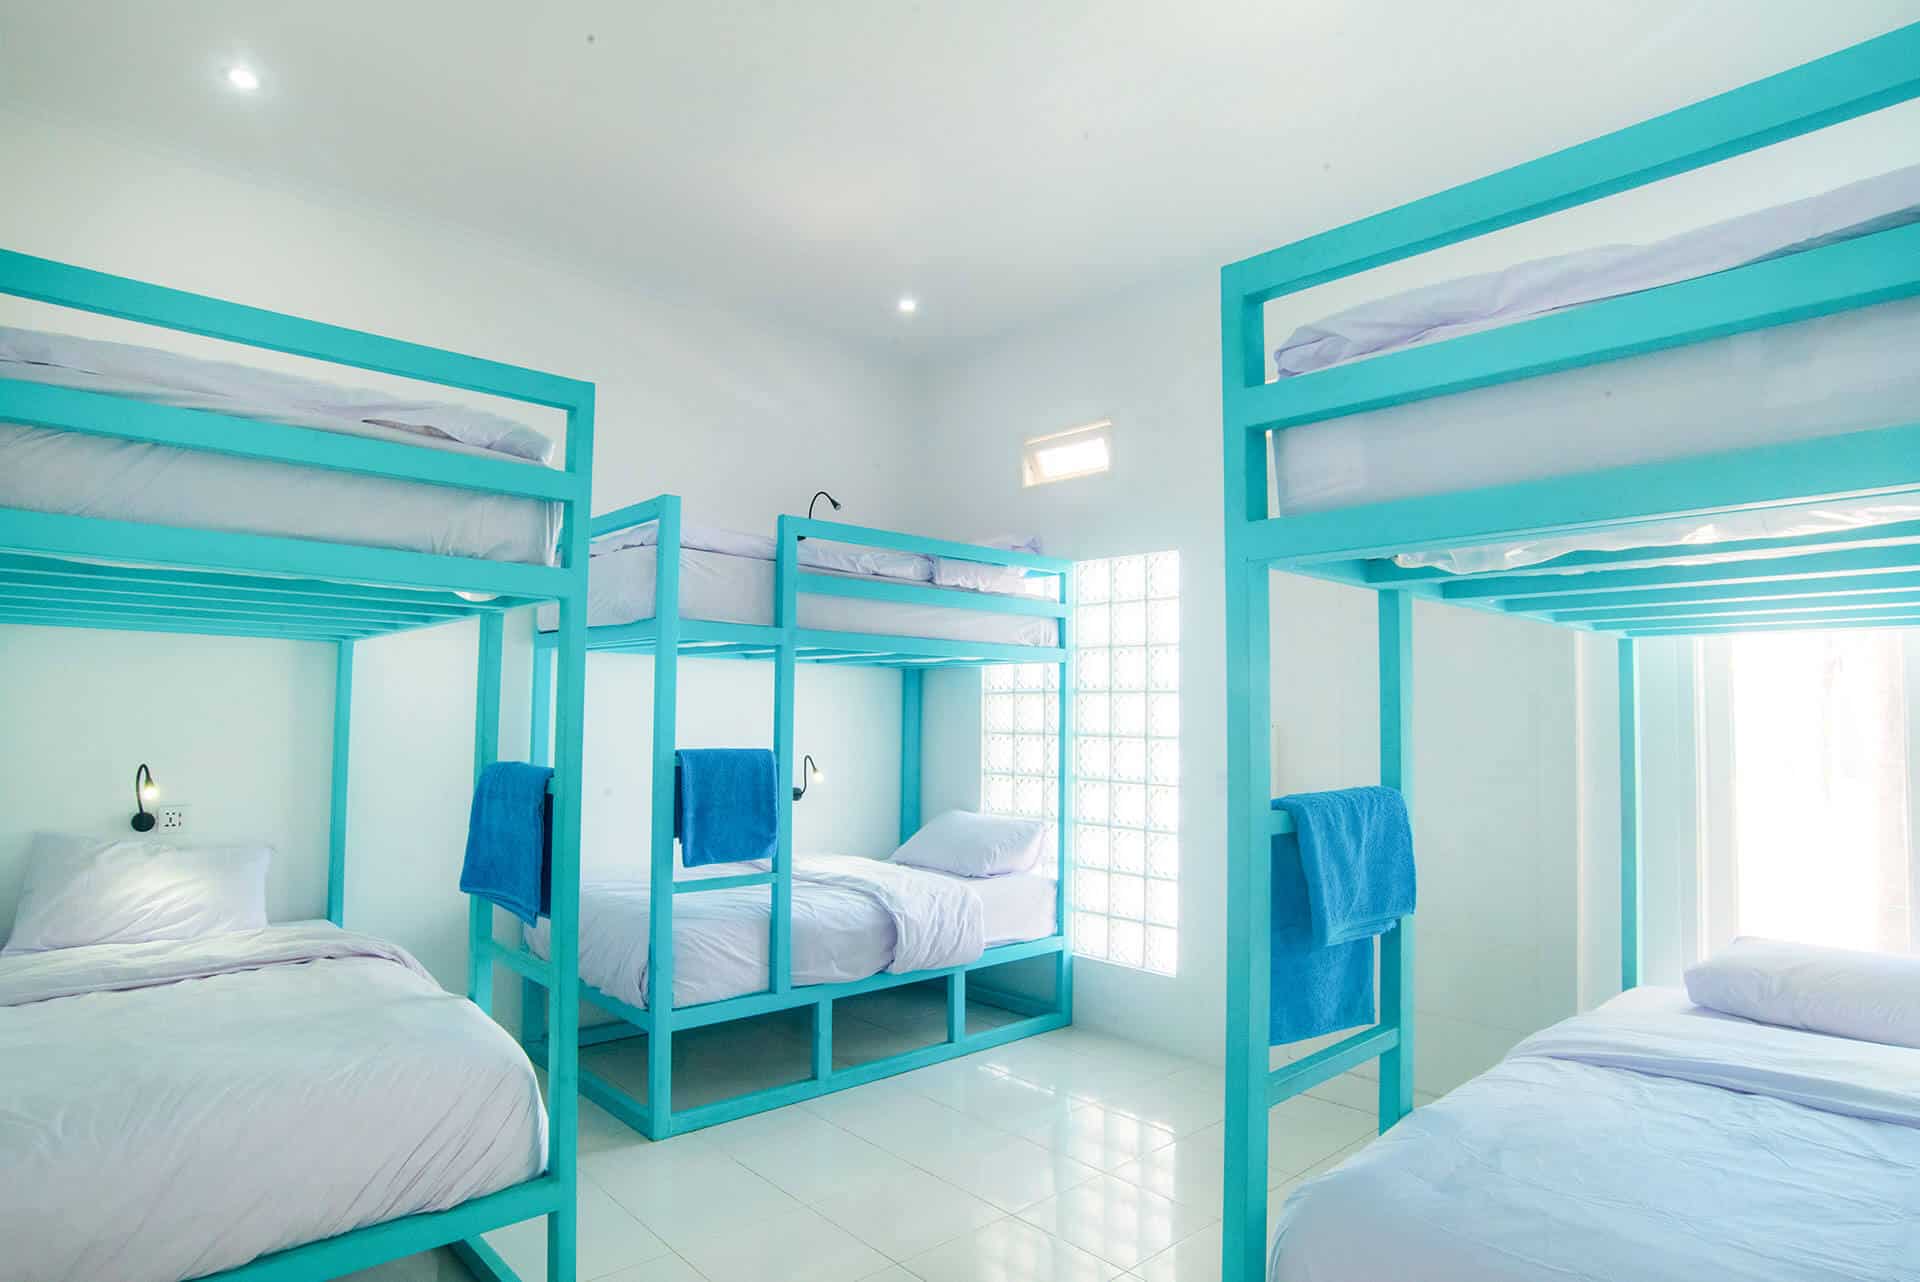 Standard 6-Bed Dorm